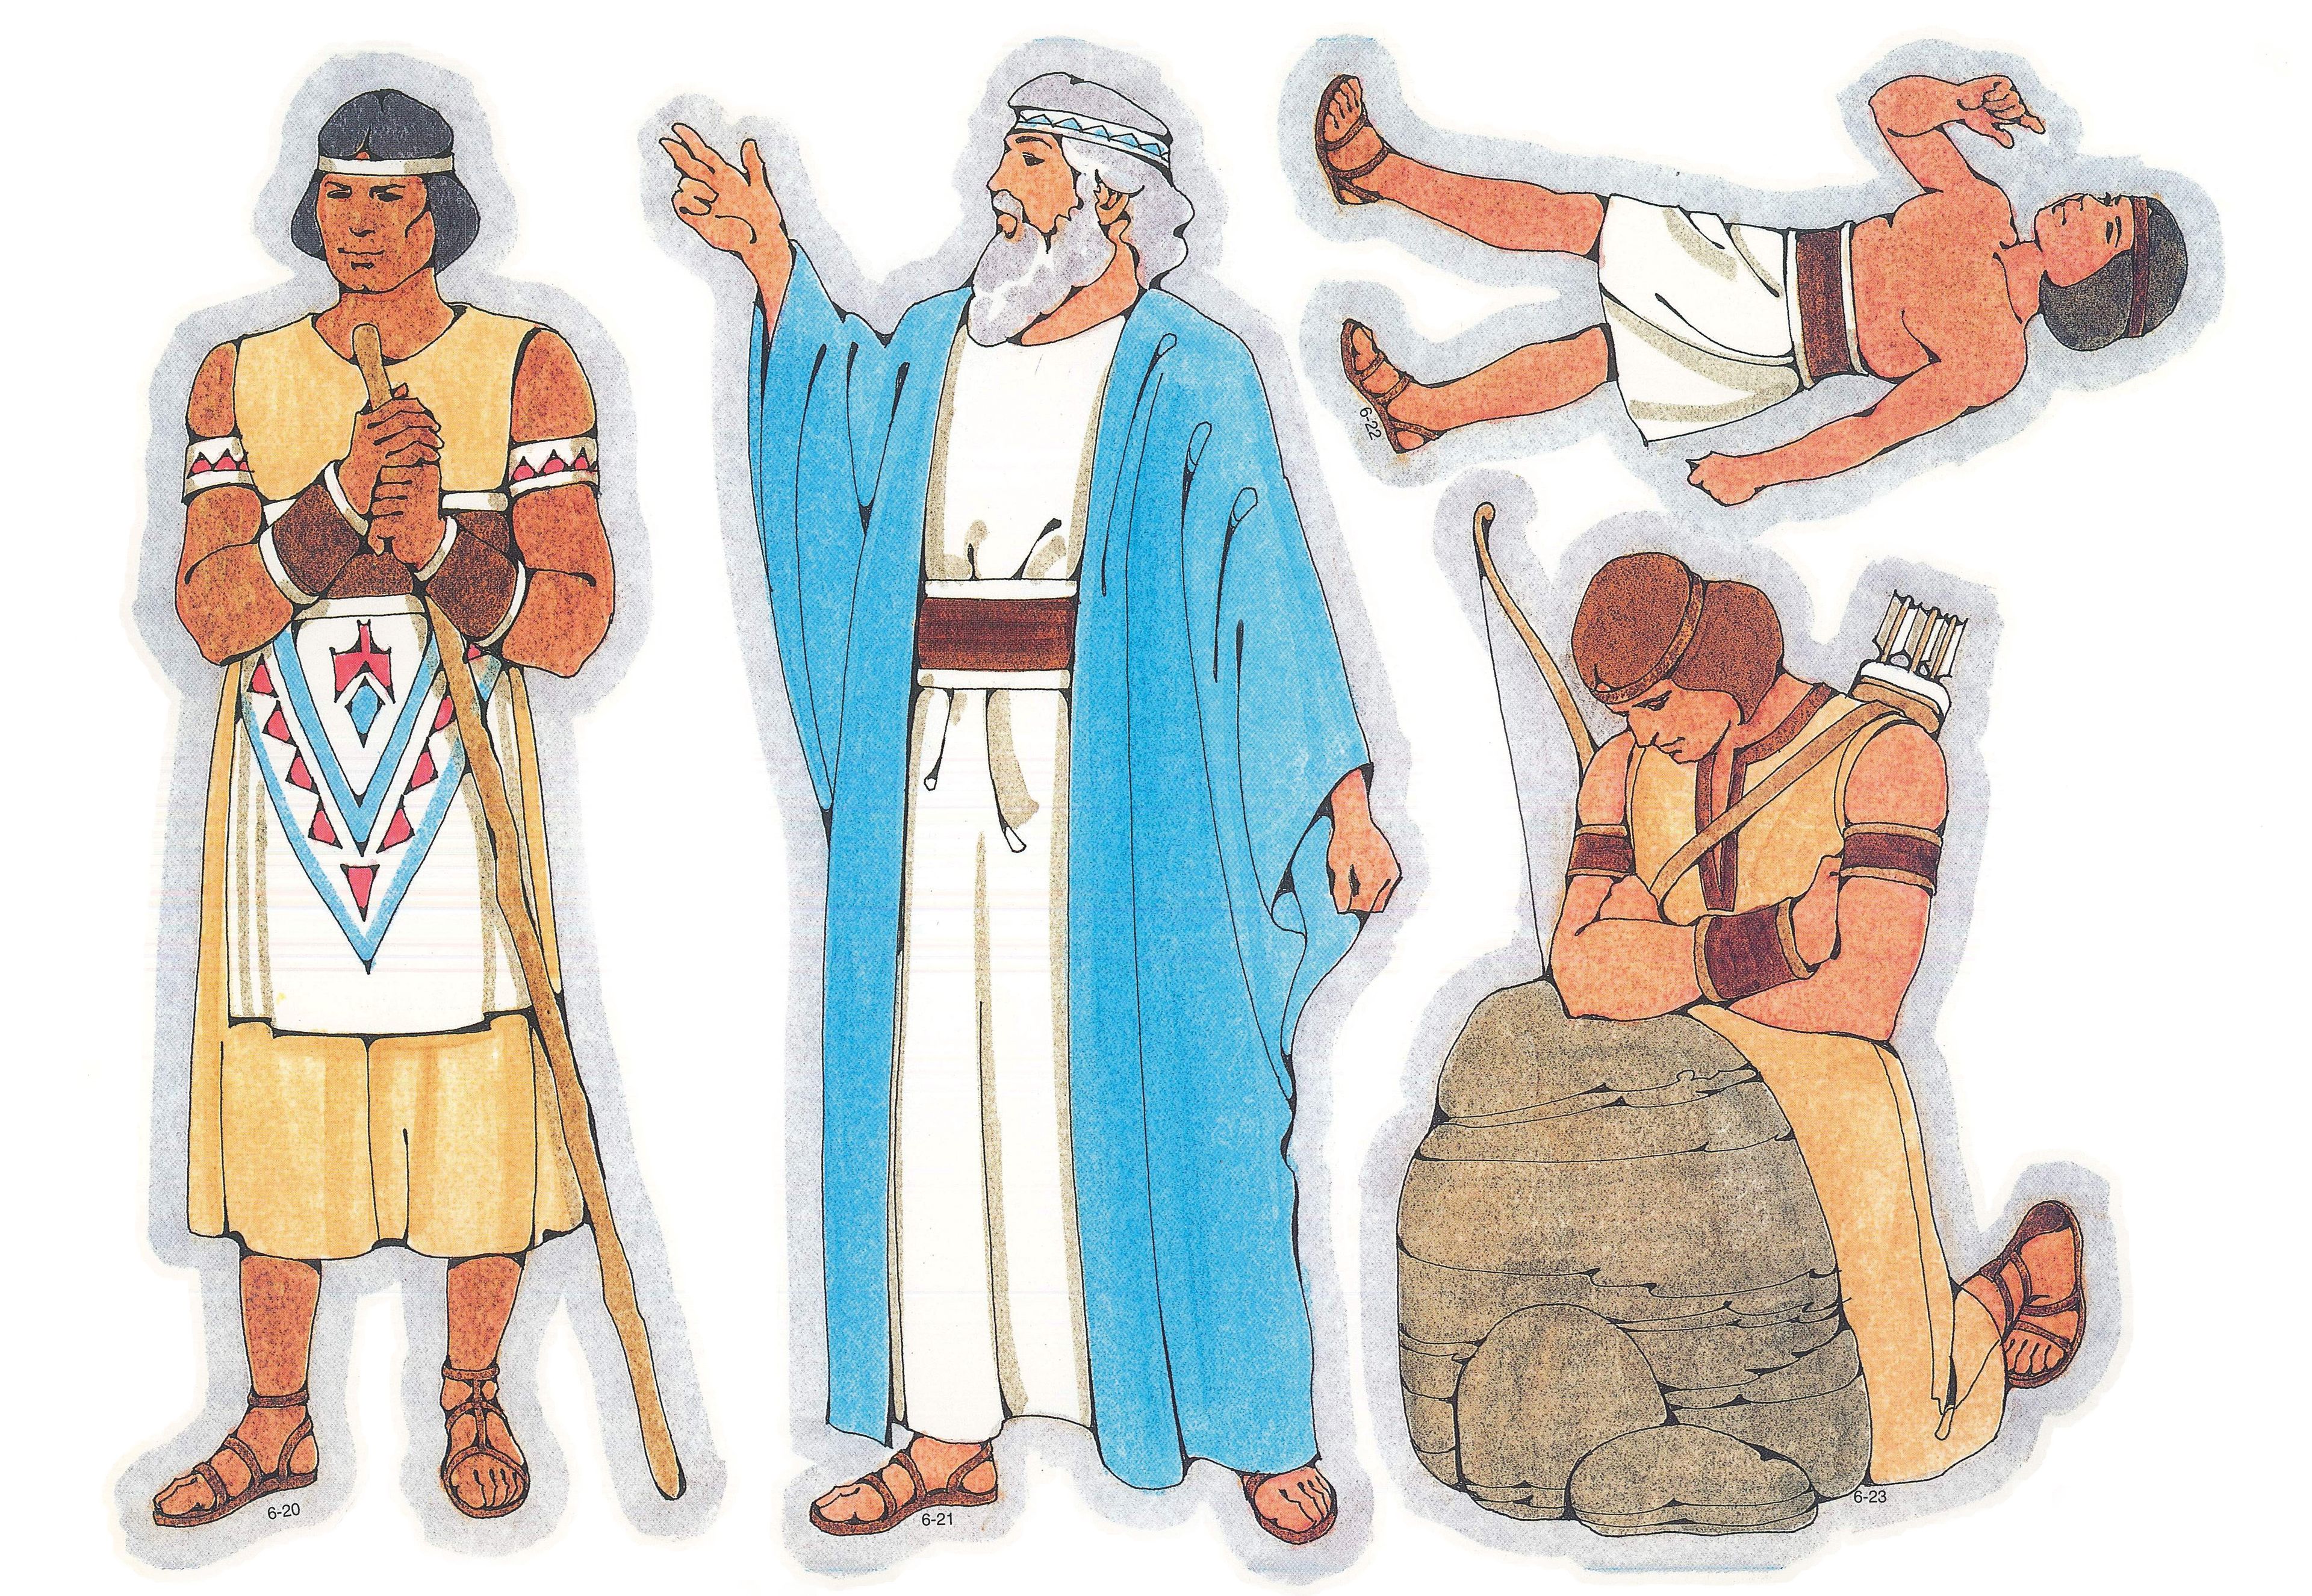 Primary Visual Aids: Cutouts 6-20, Lamanite Man; 6-21, Book of Mormon Prophet; 6-22, Lamanite Boy; 6-23, Enos Praying.